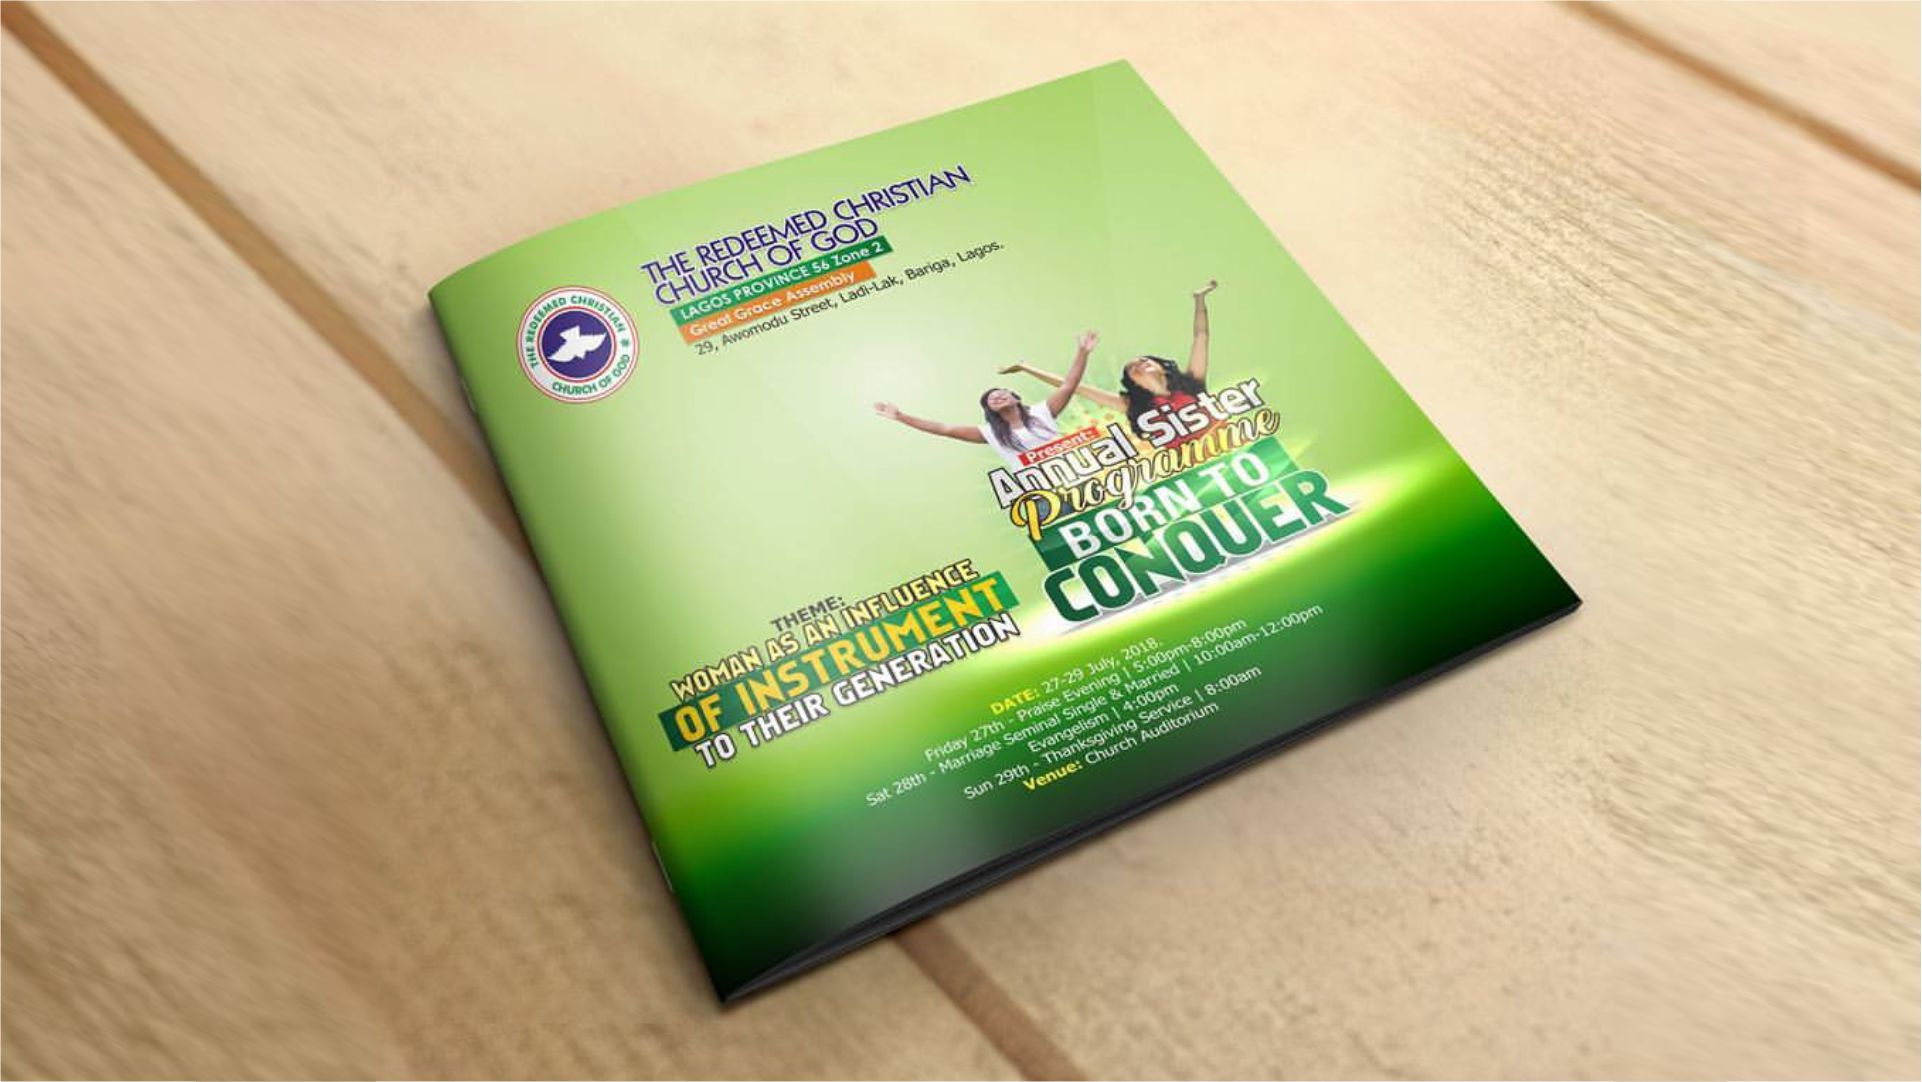 Church Program printing and design in Lagos Nigeria